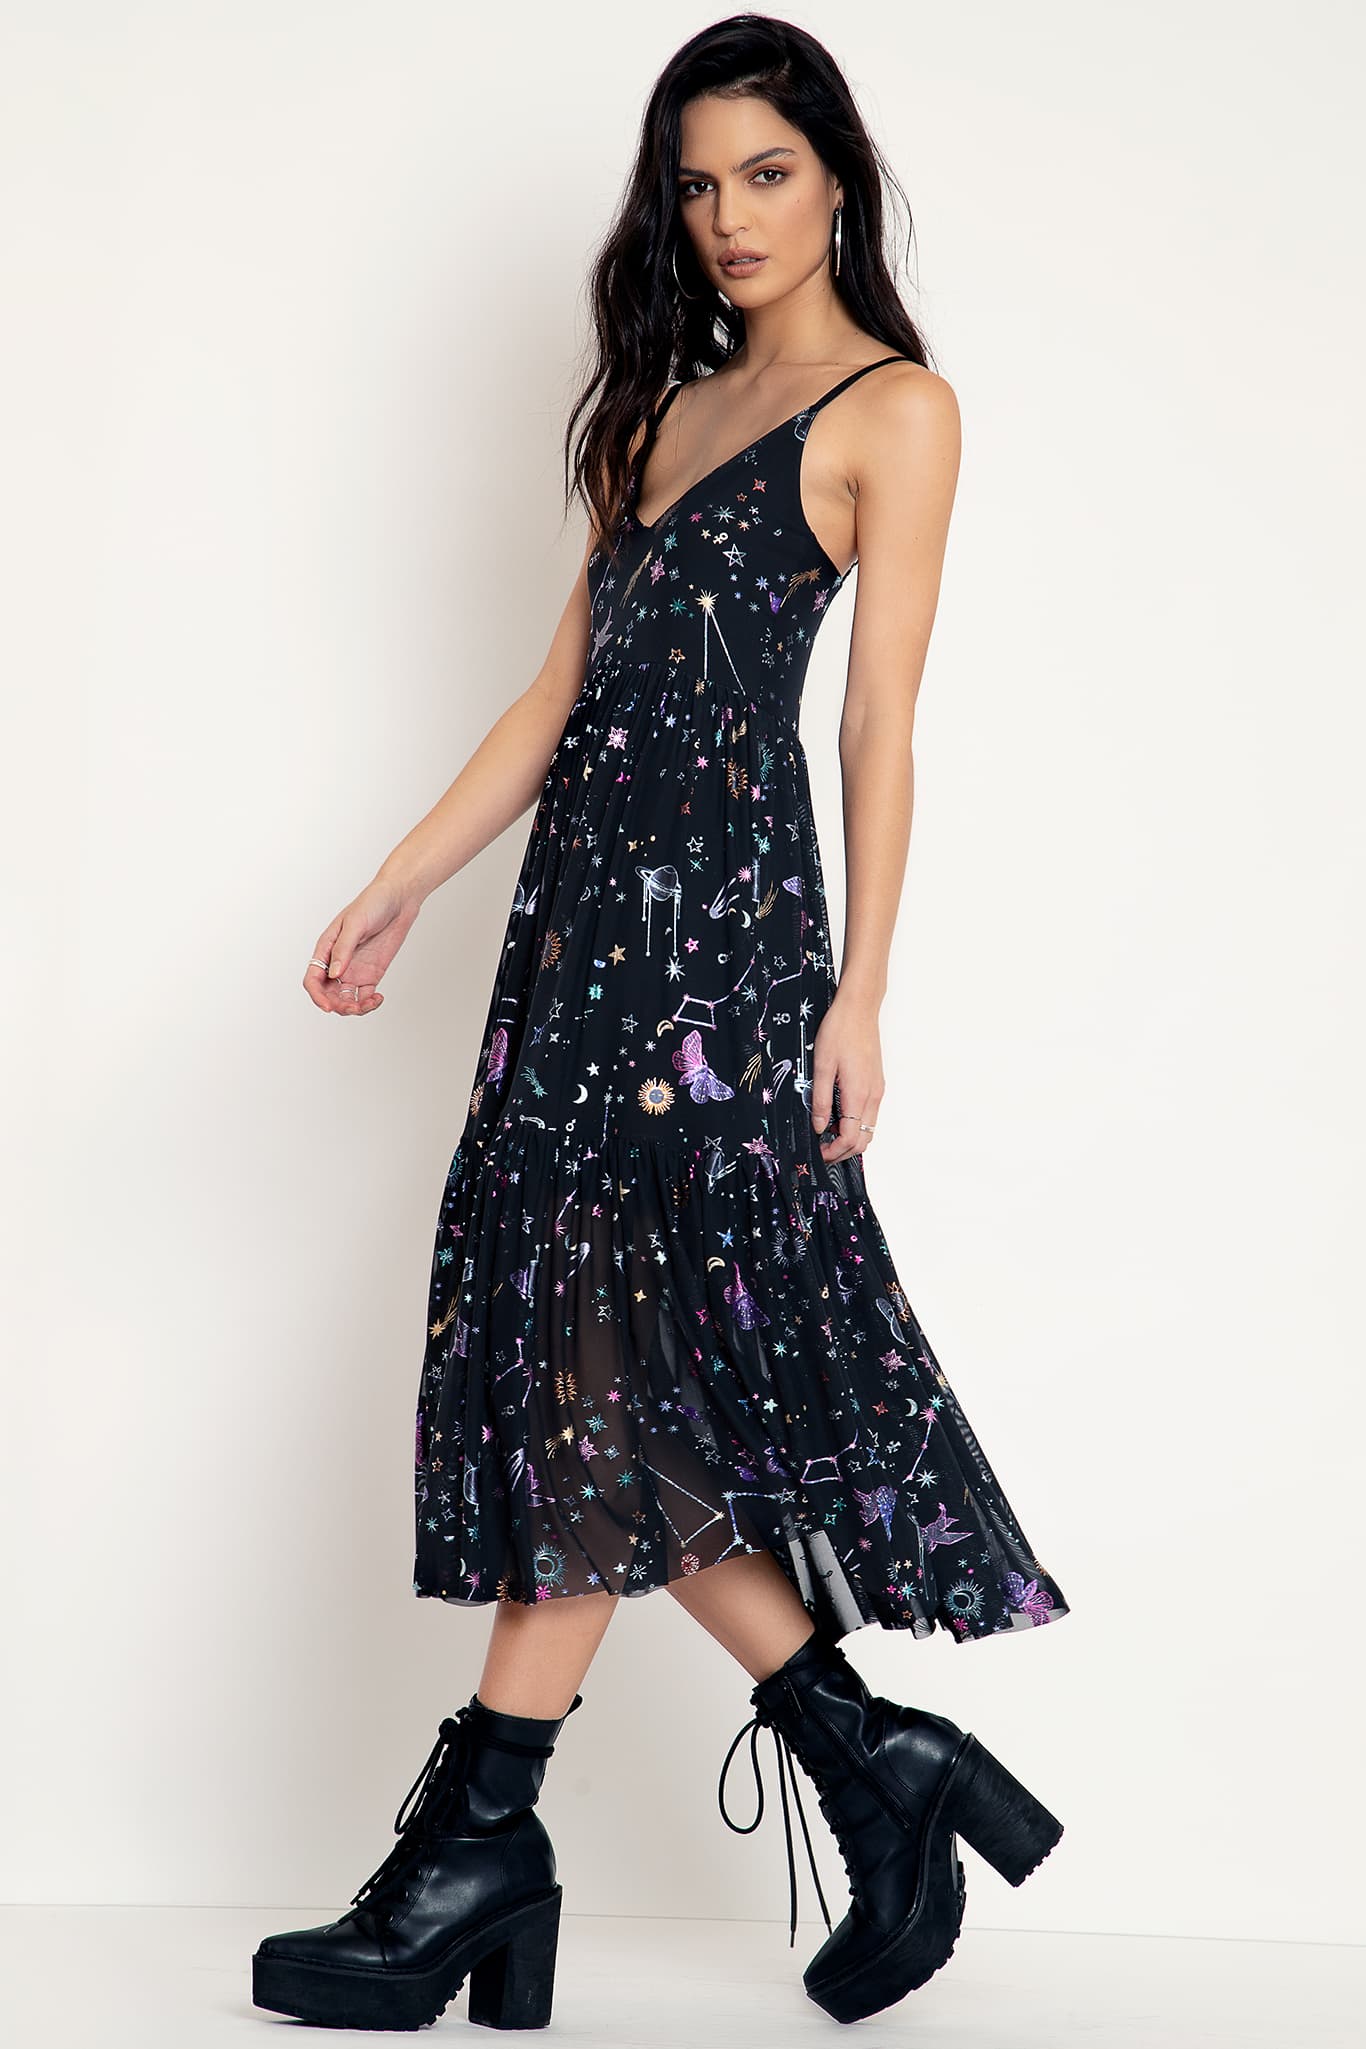 Celestial Sketch Sheer Midaxi Dress - Limited